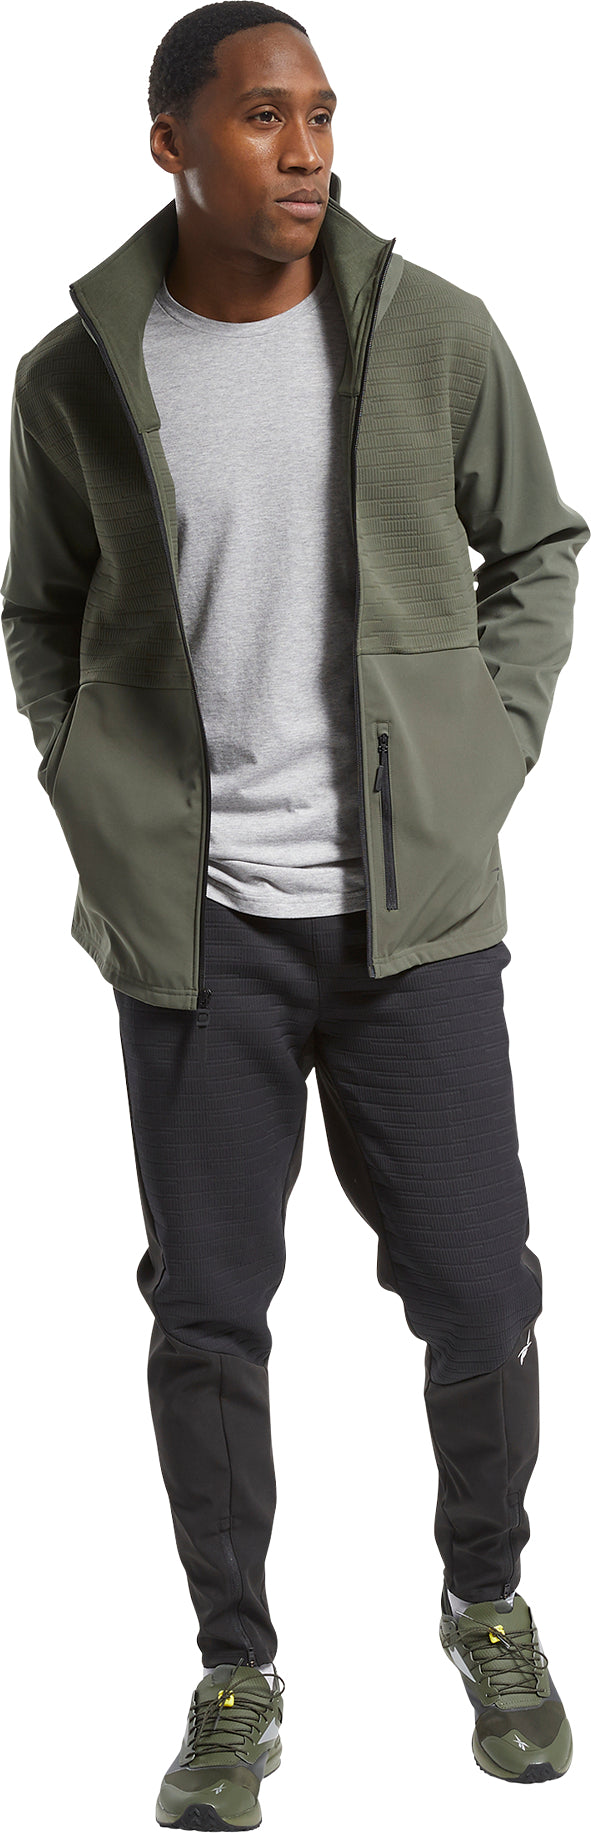 outdoor thermowarm deltapeak hybrid jacket